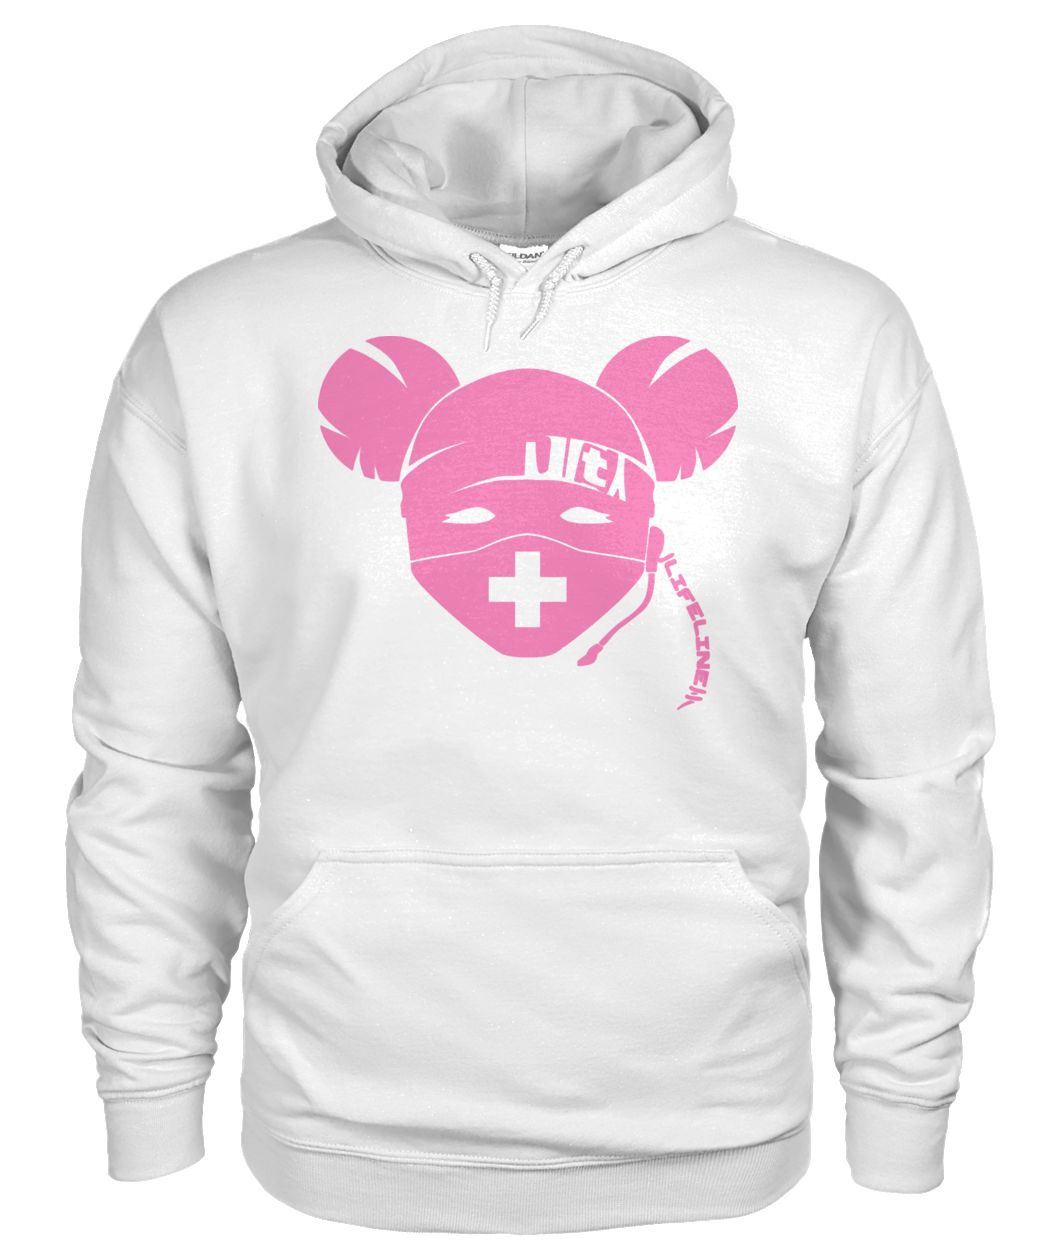 Apex legends lifeline clean pink graphic gildan hoodie